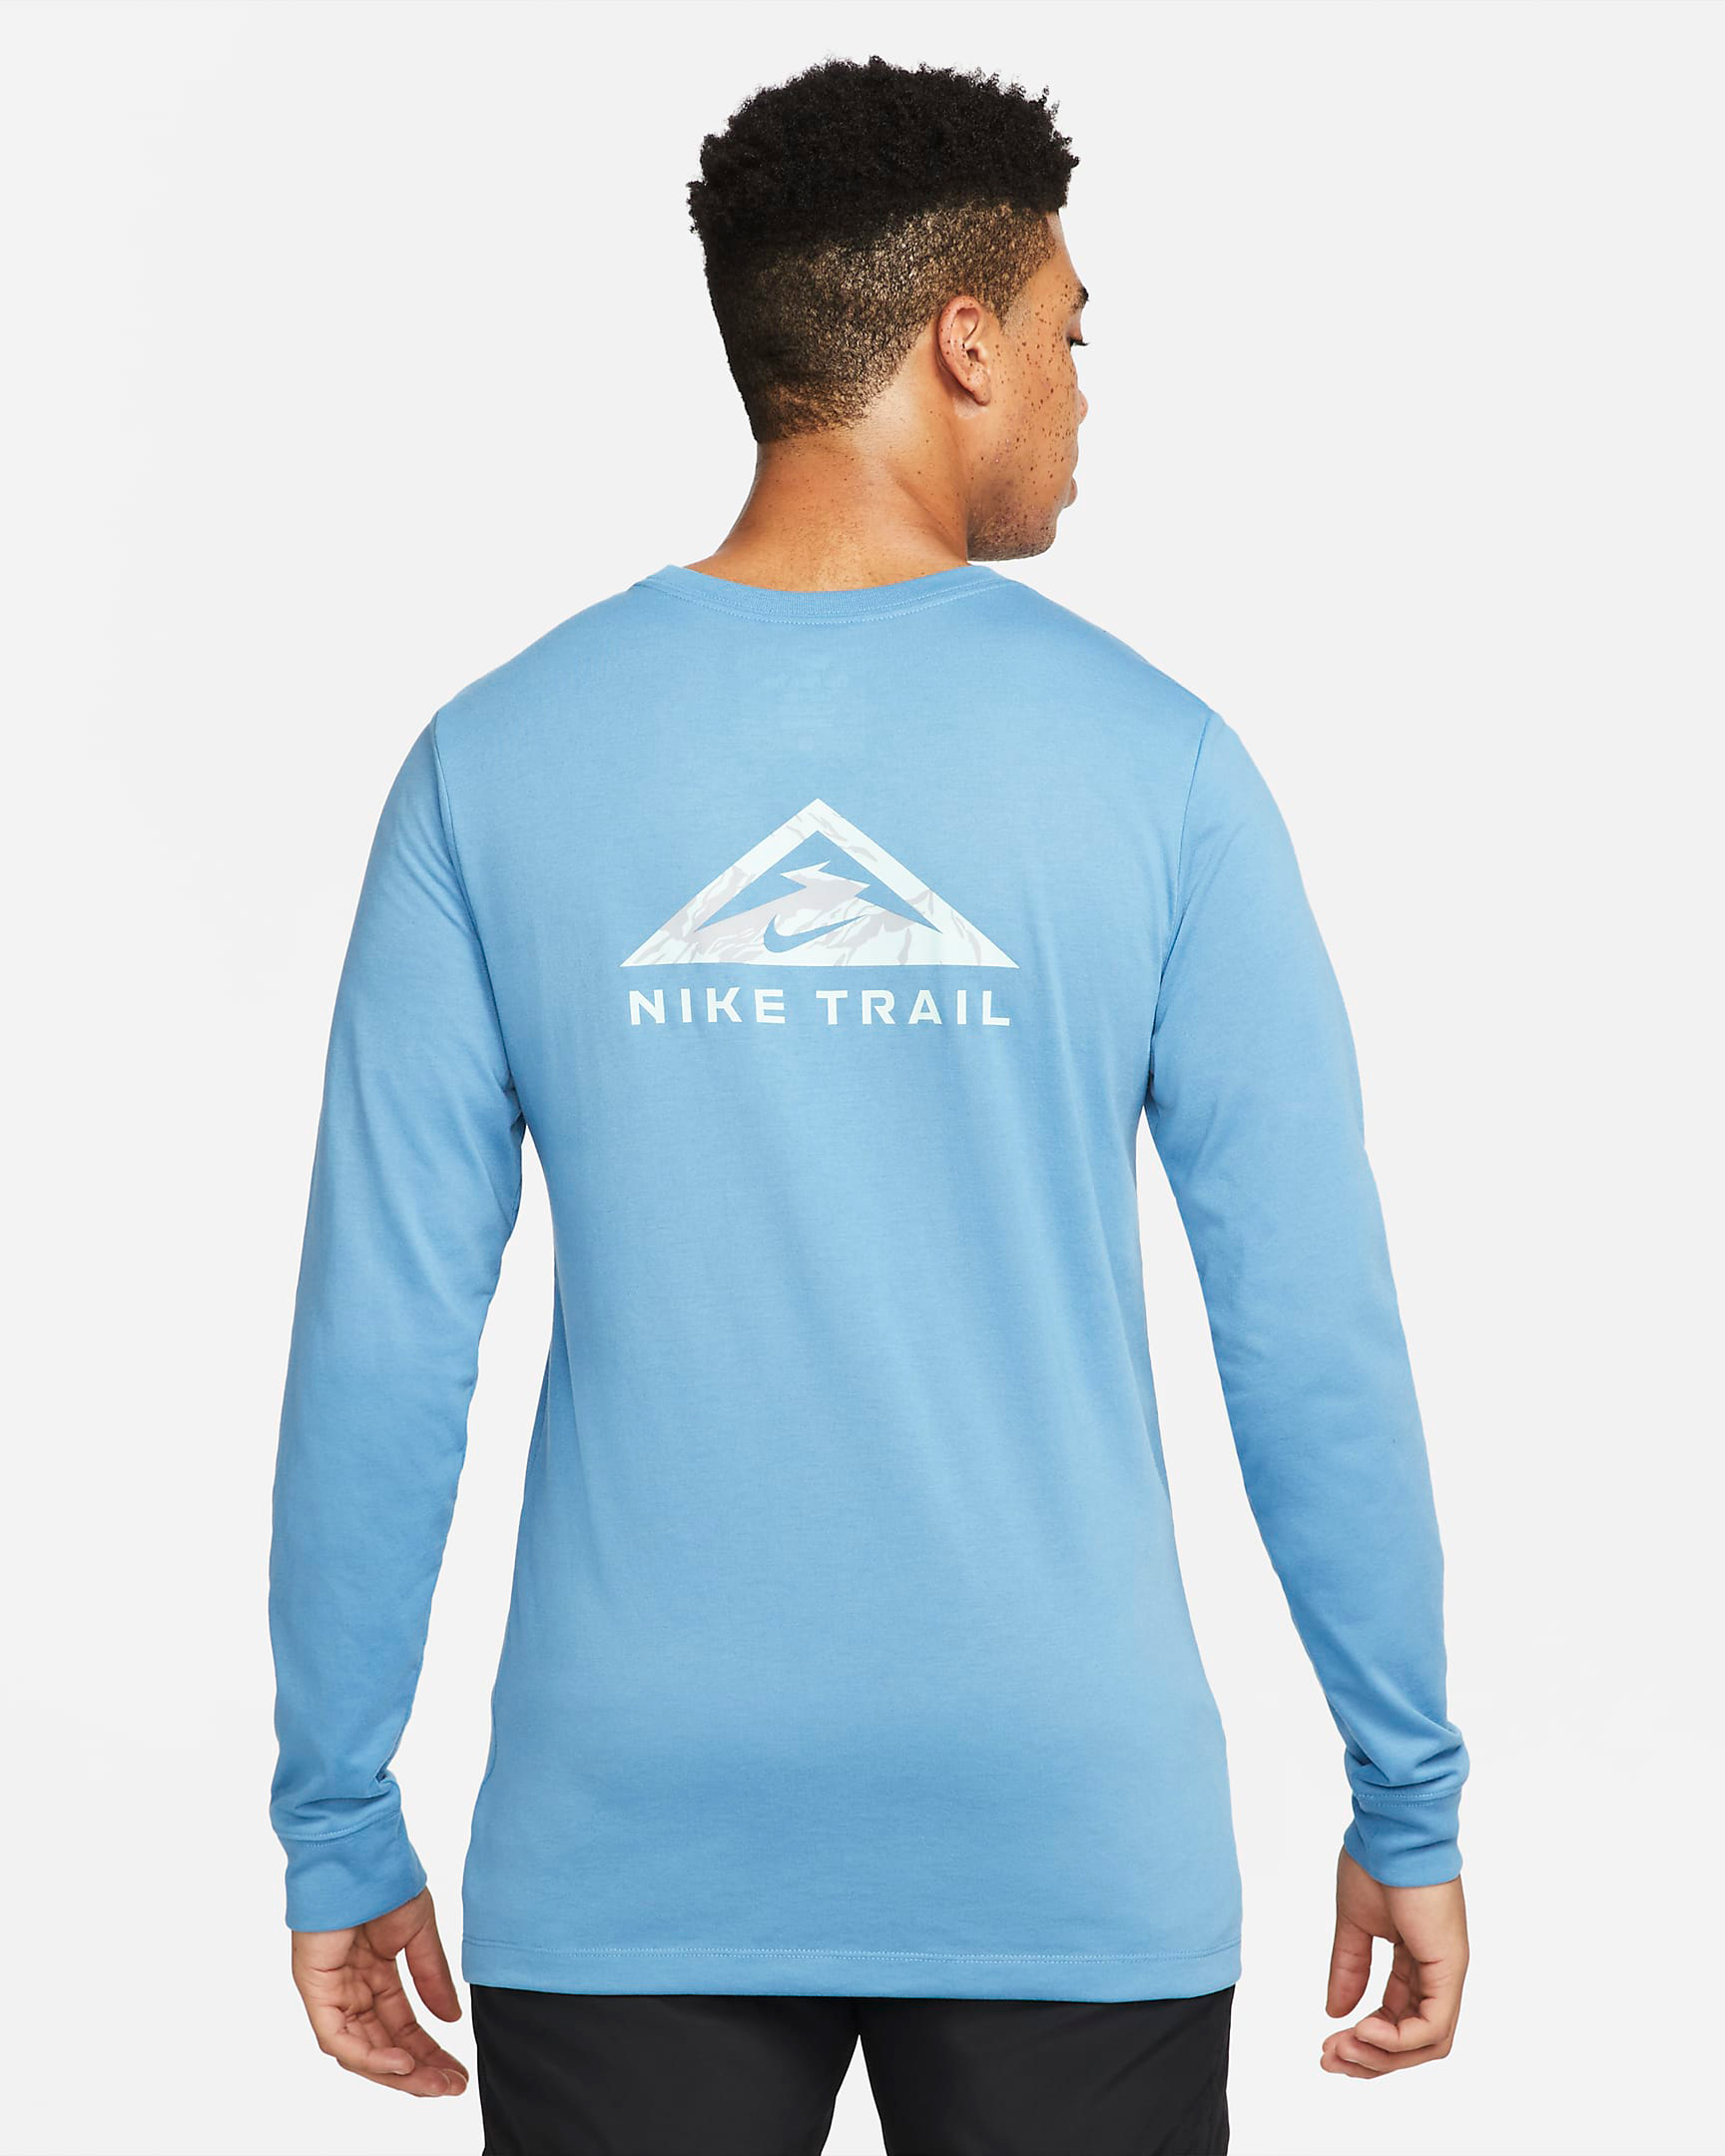 nike-dutch-blue-trail-running-long-sleeve-t-shirt-2